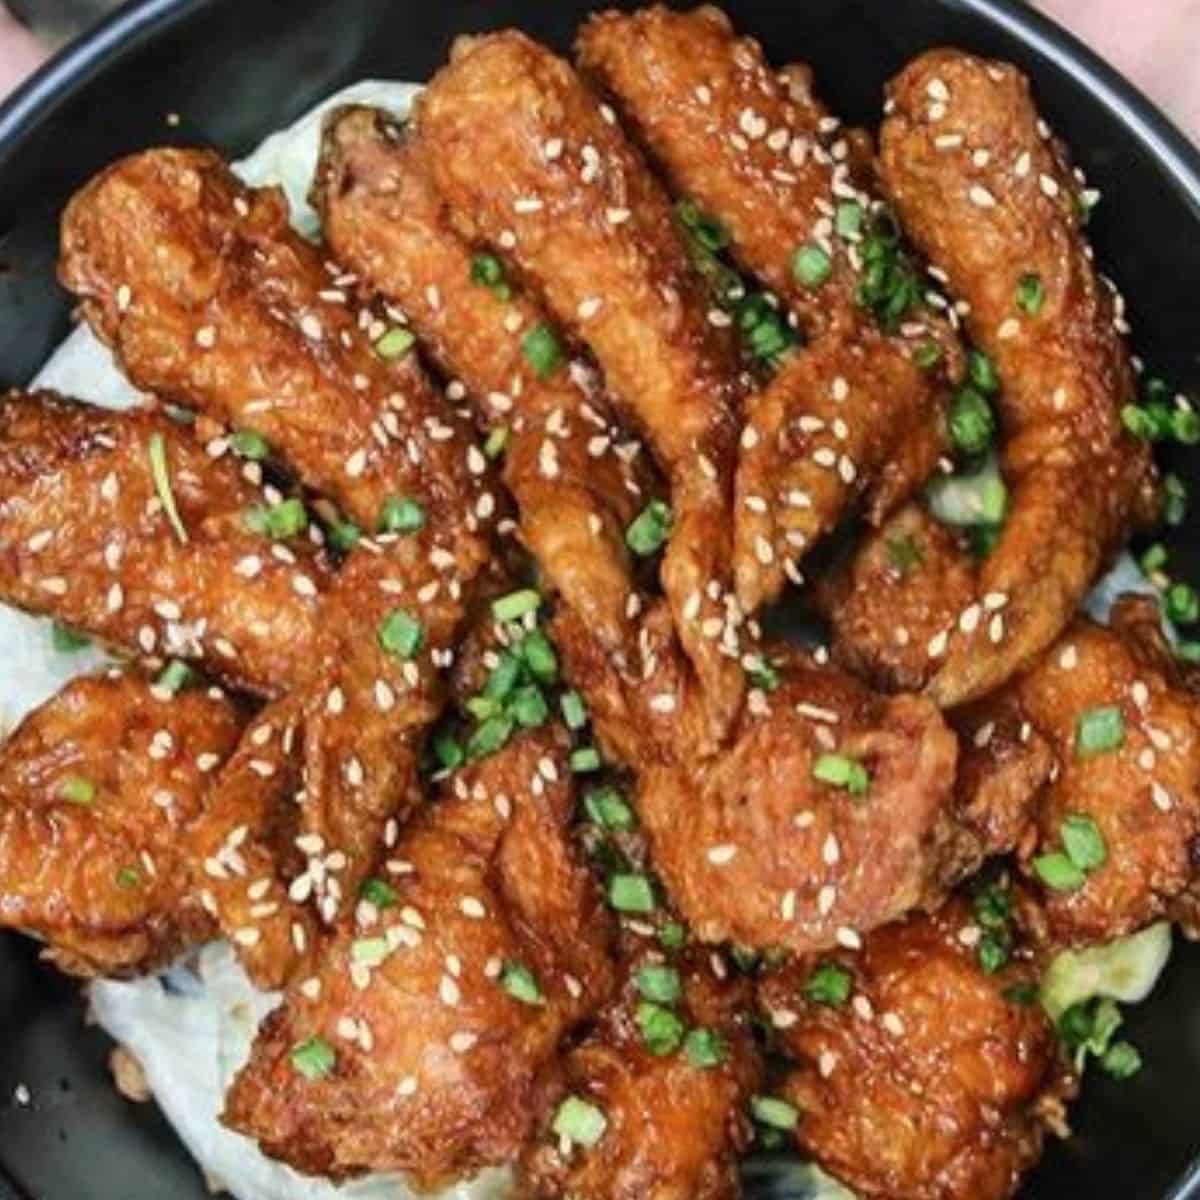 Best Korean BBQ in Singapore Im KIM Korean BBQs Signature chicken wings with garlic